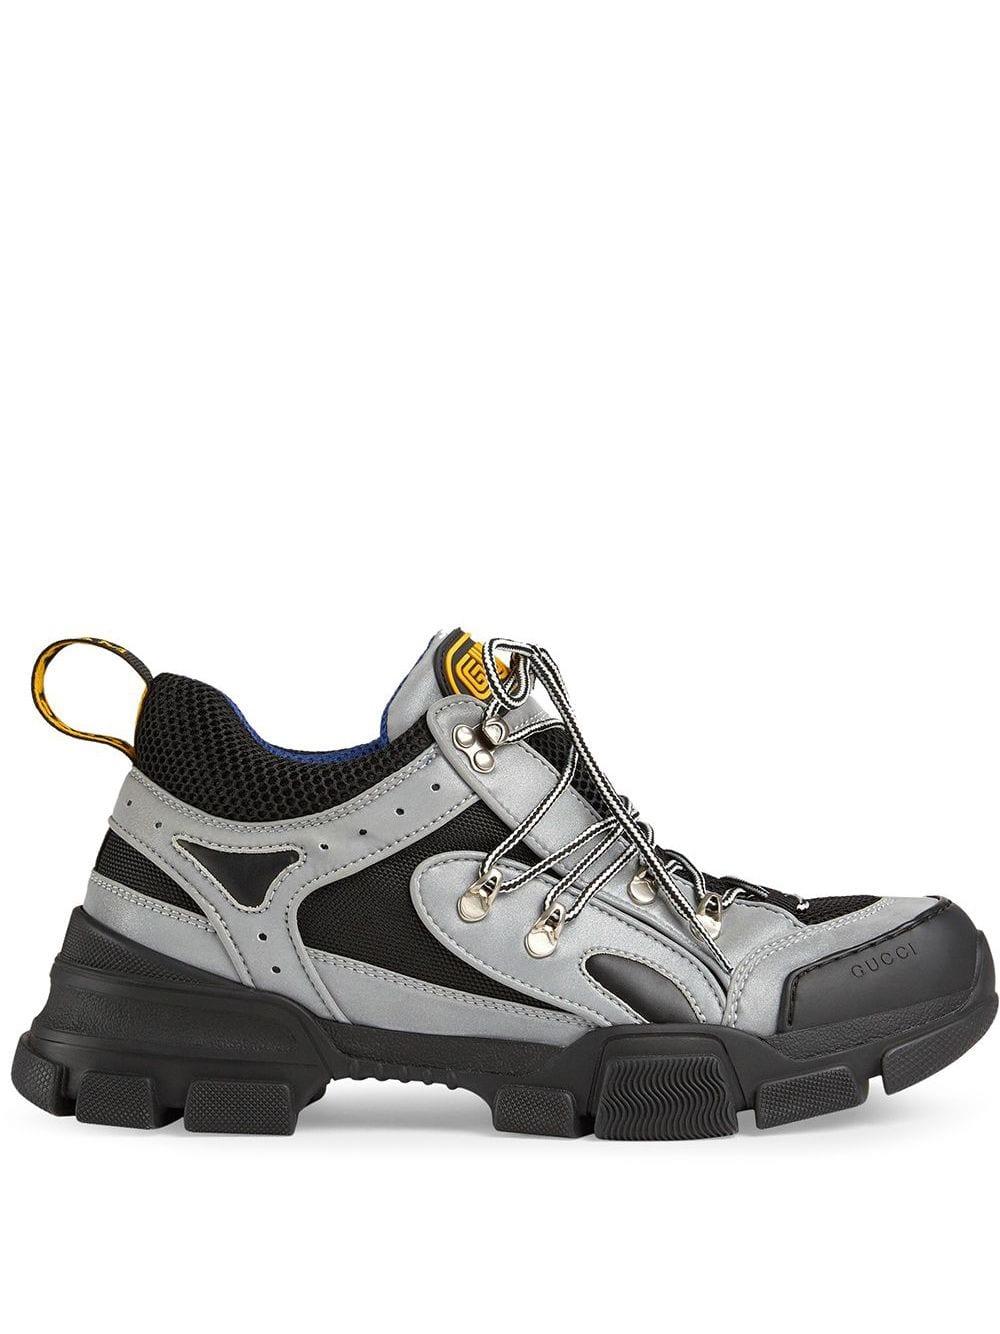 Gucci Leather Flashtrek Sneaker in Silver (Metallic) for Men - Lyst